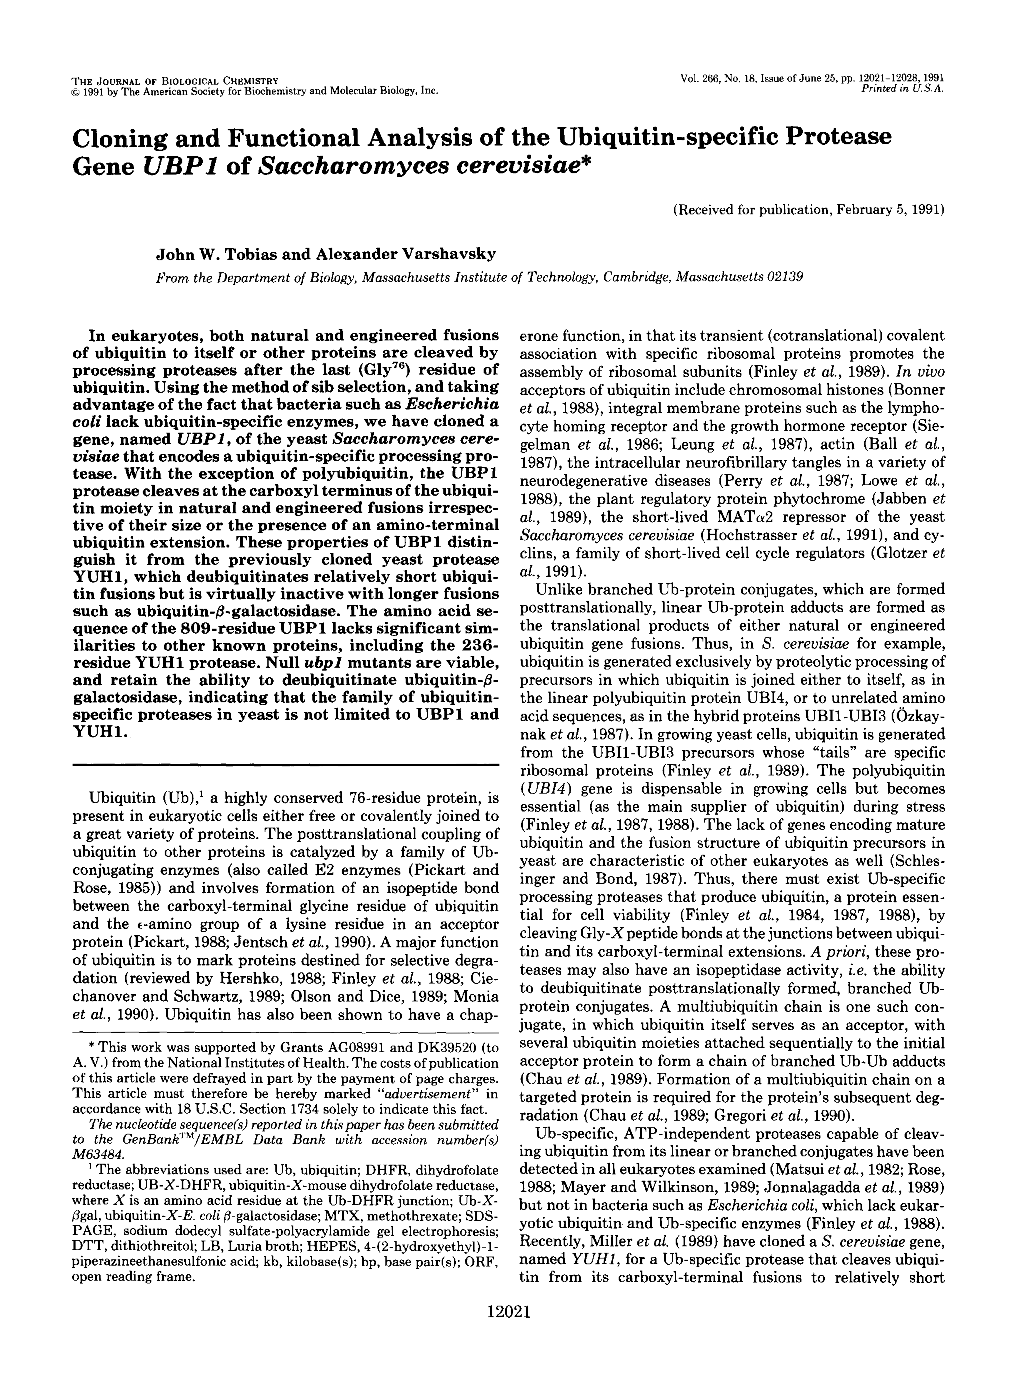 Gene UBP1 of Saccharomyces Cereuisiae”